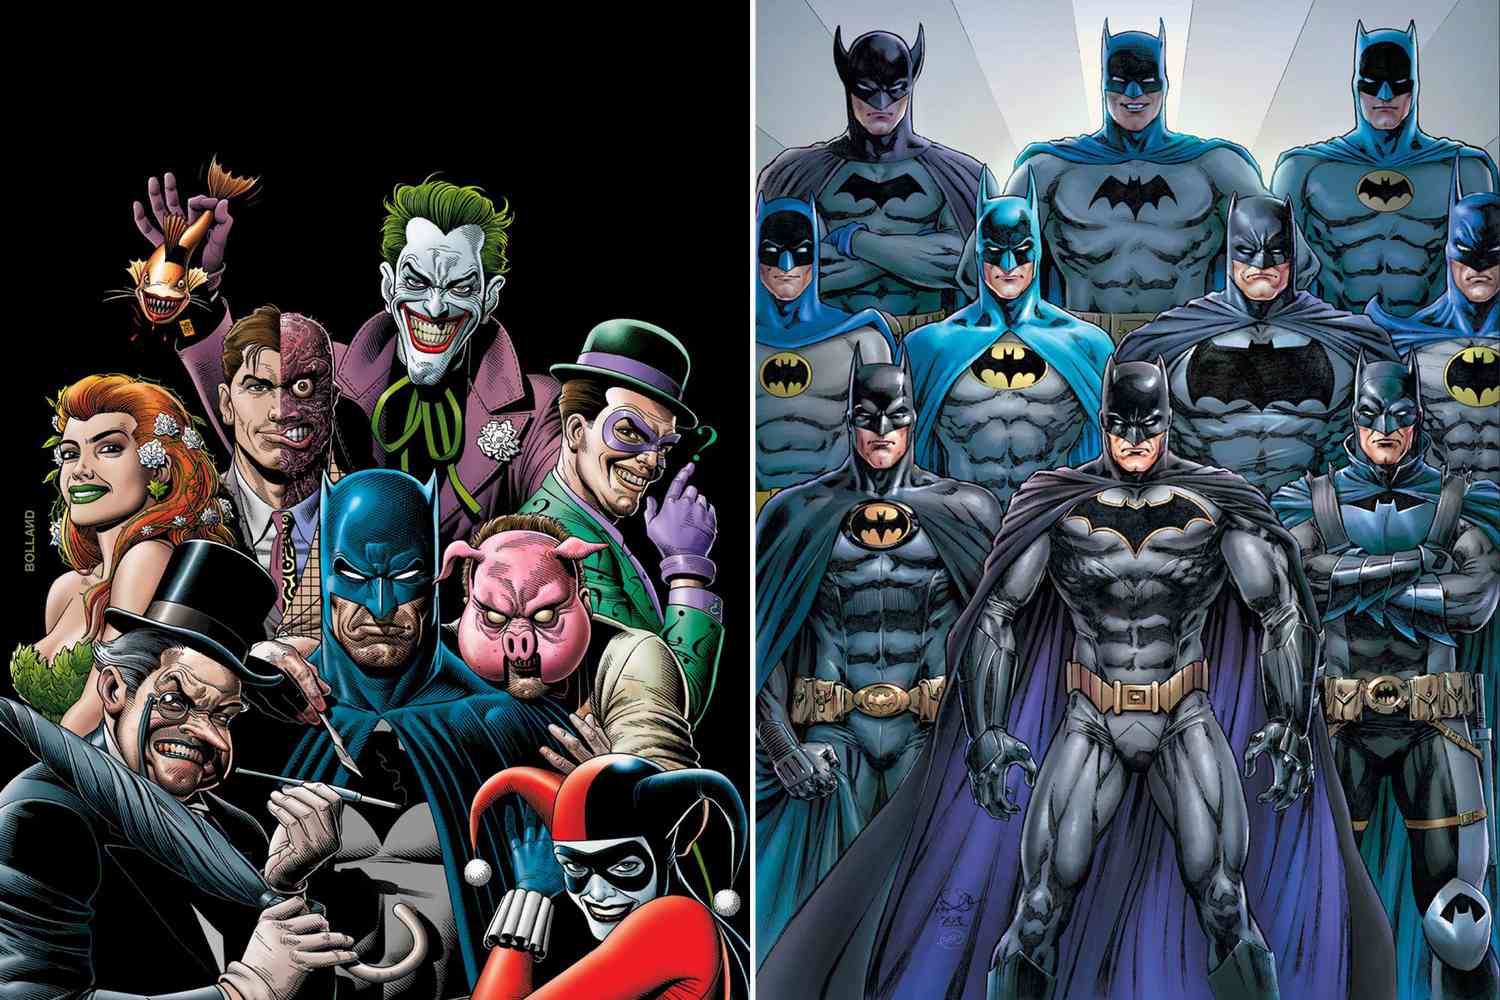 DC Comics co-publishers reflect on Batman's 80th birthday 